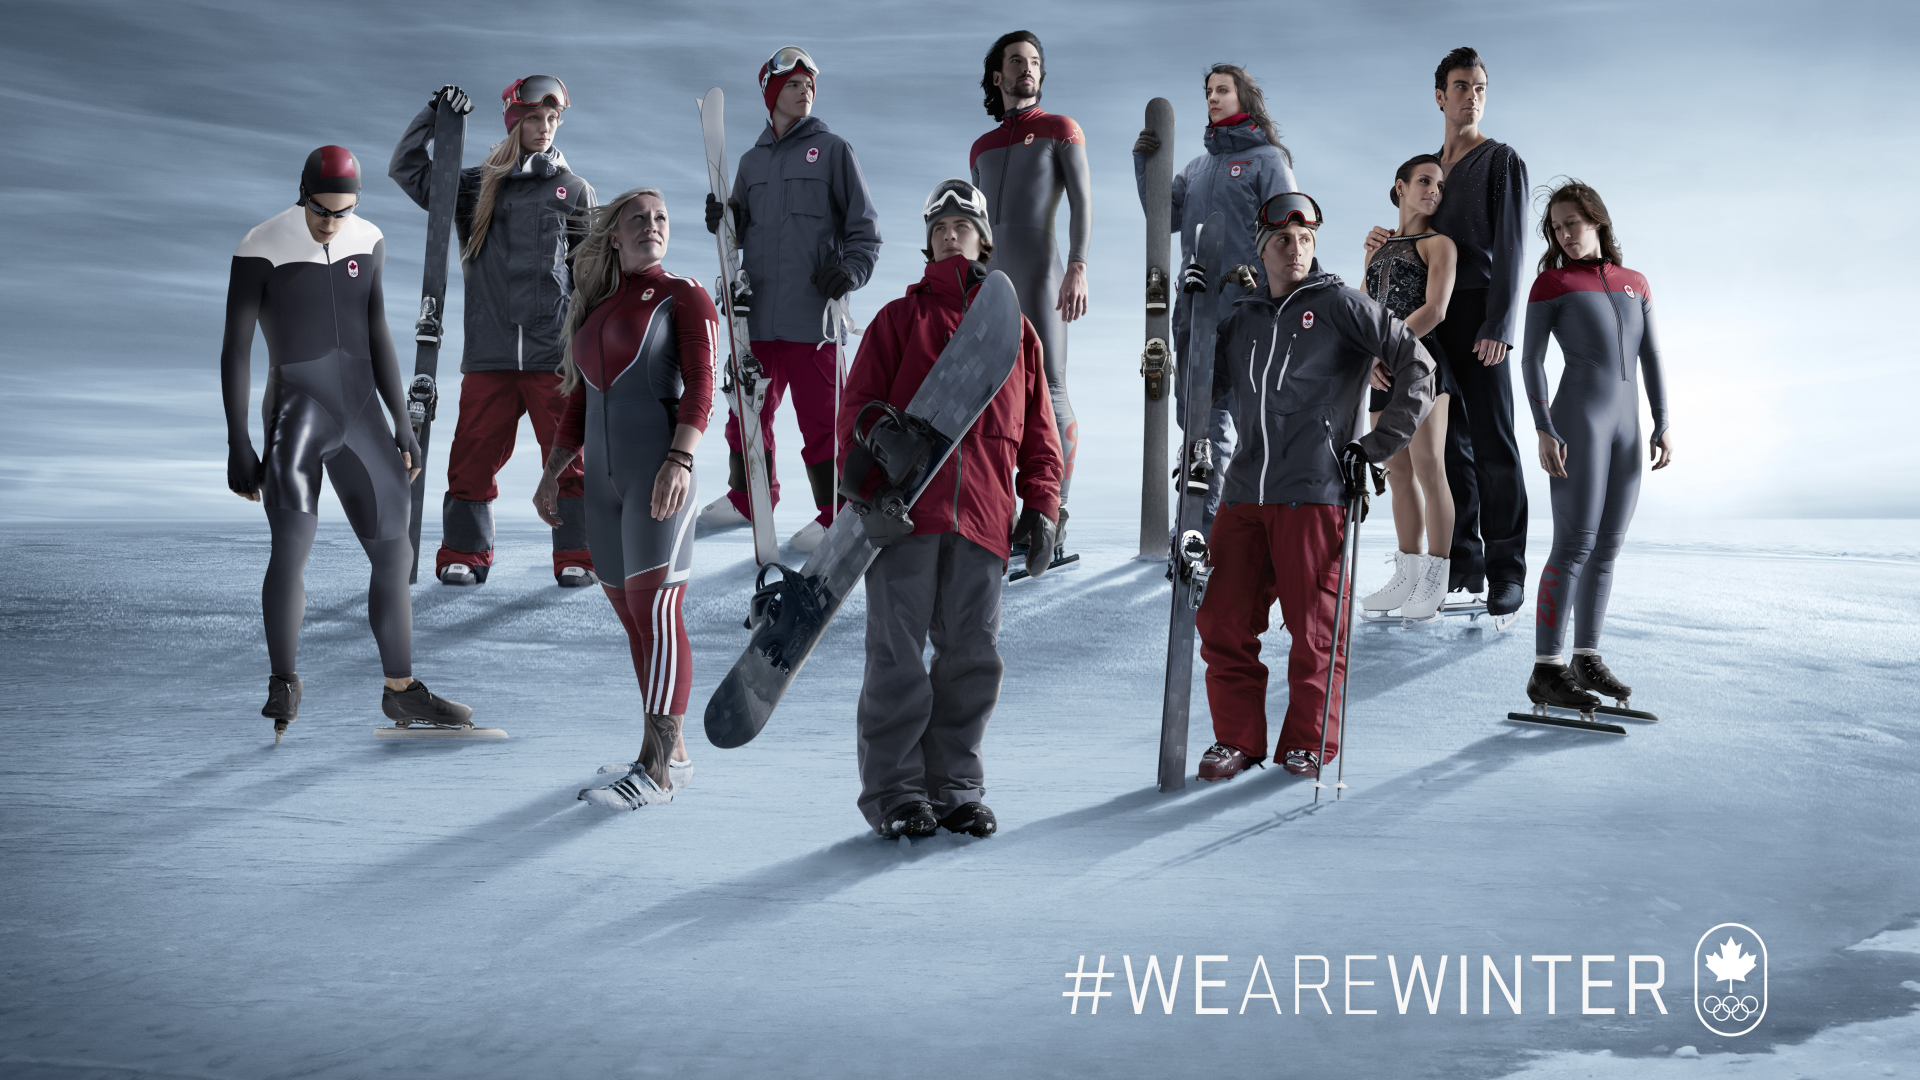 we are winter, 2014, team, sochi, canadian, canada, wearewinter, olympic, canadian olympic team